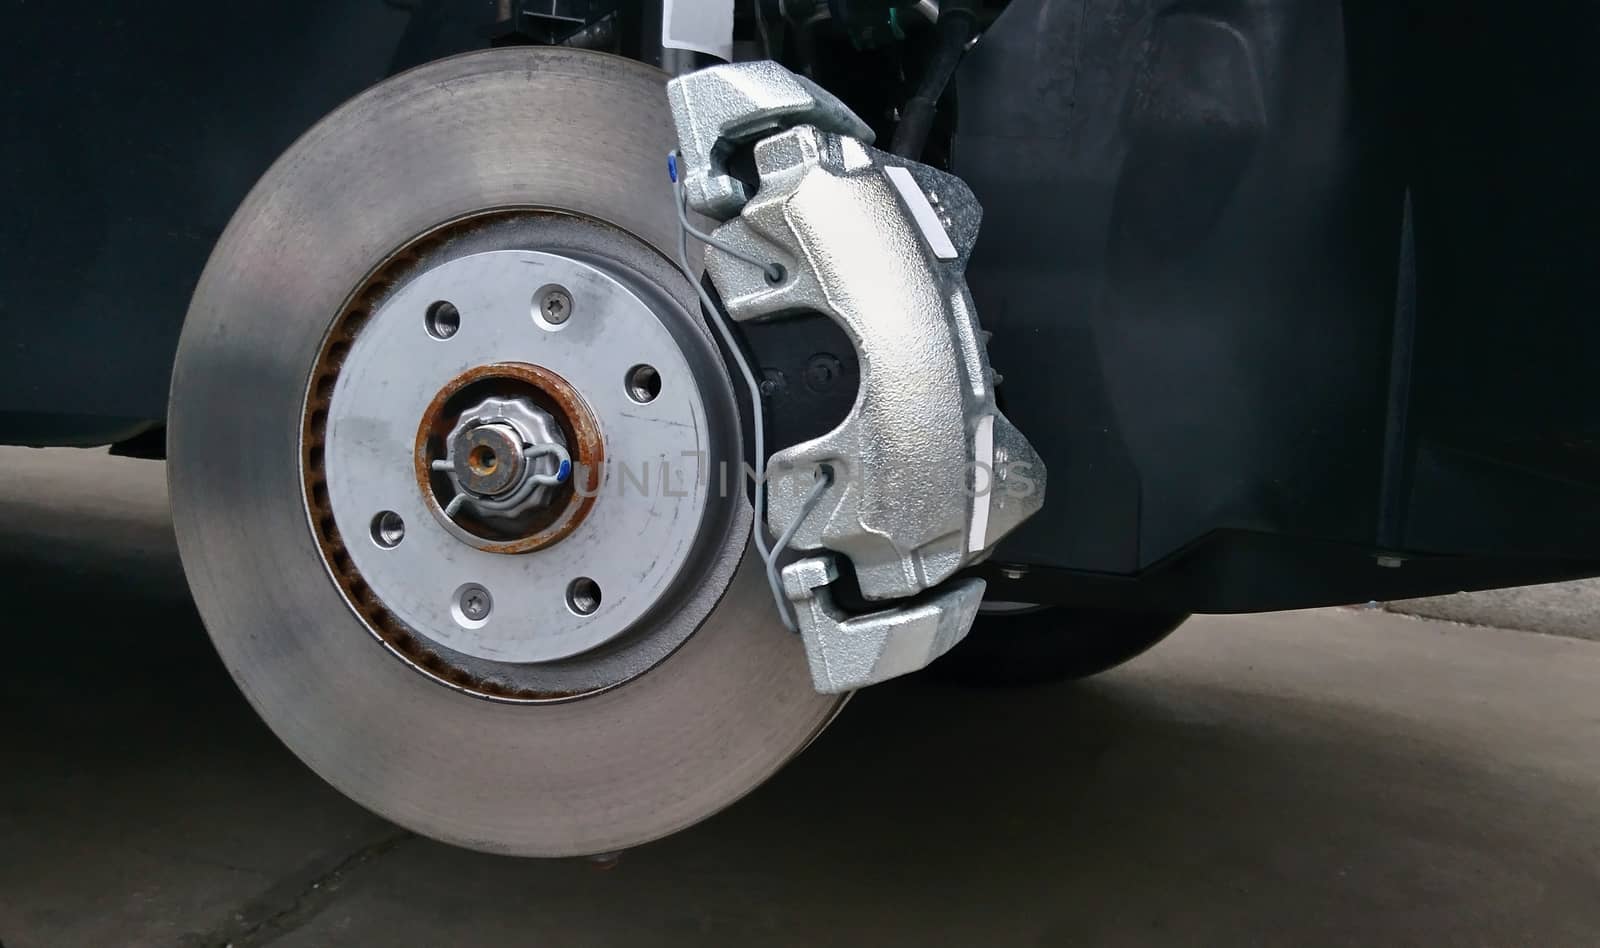 Close-up of a car disc brake by hamik